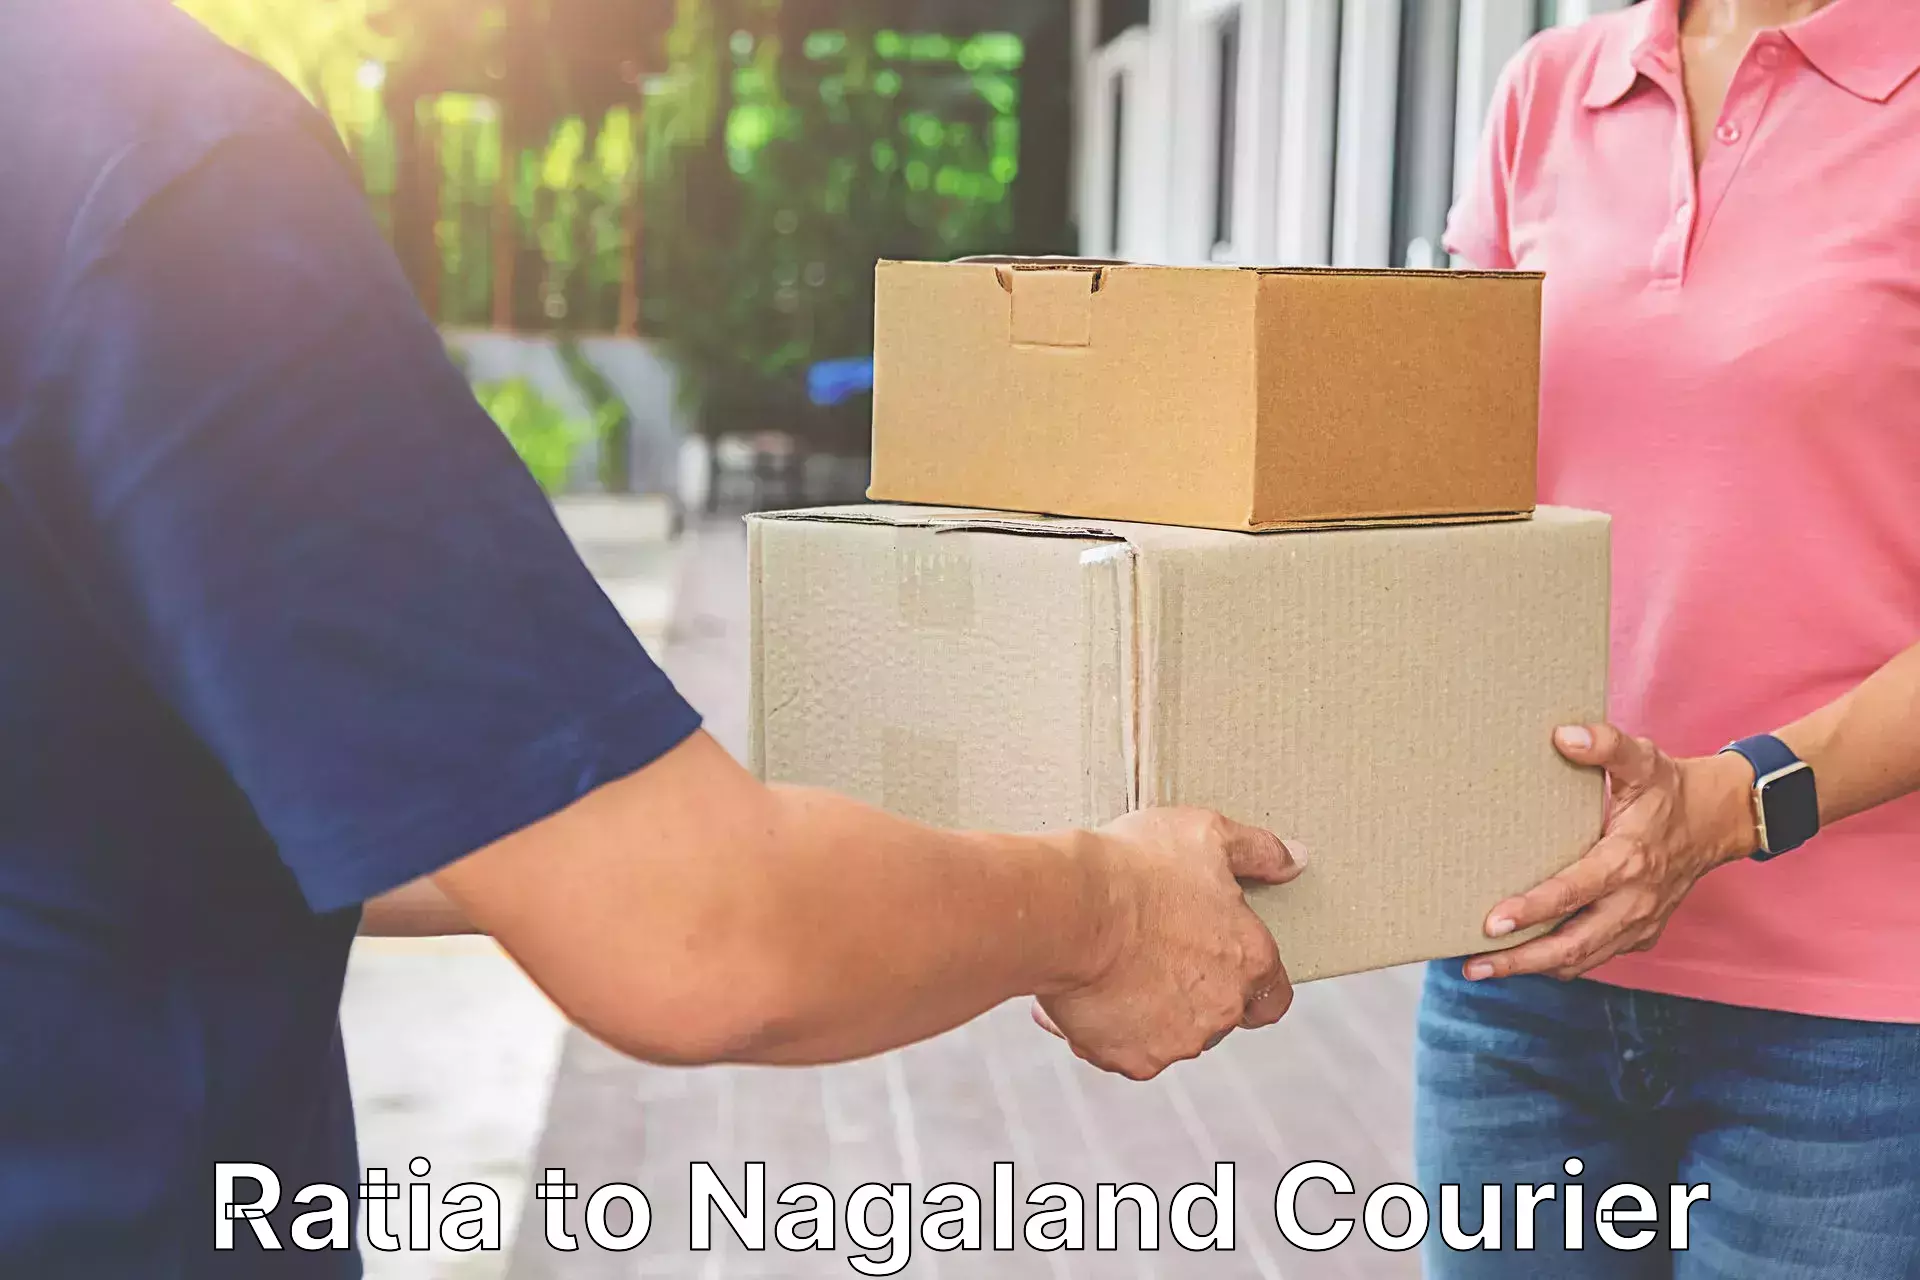 Modern courier technology Ratia to Nagaland